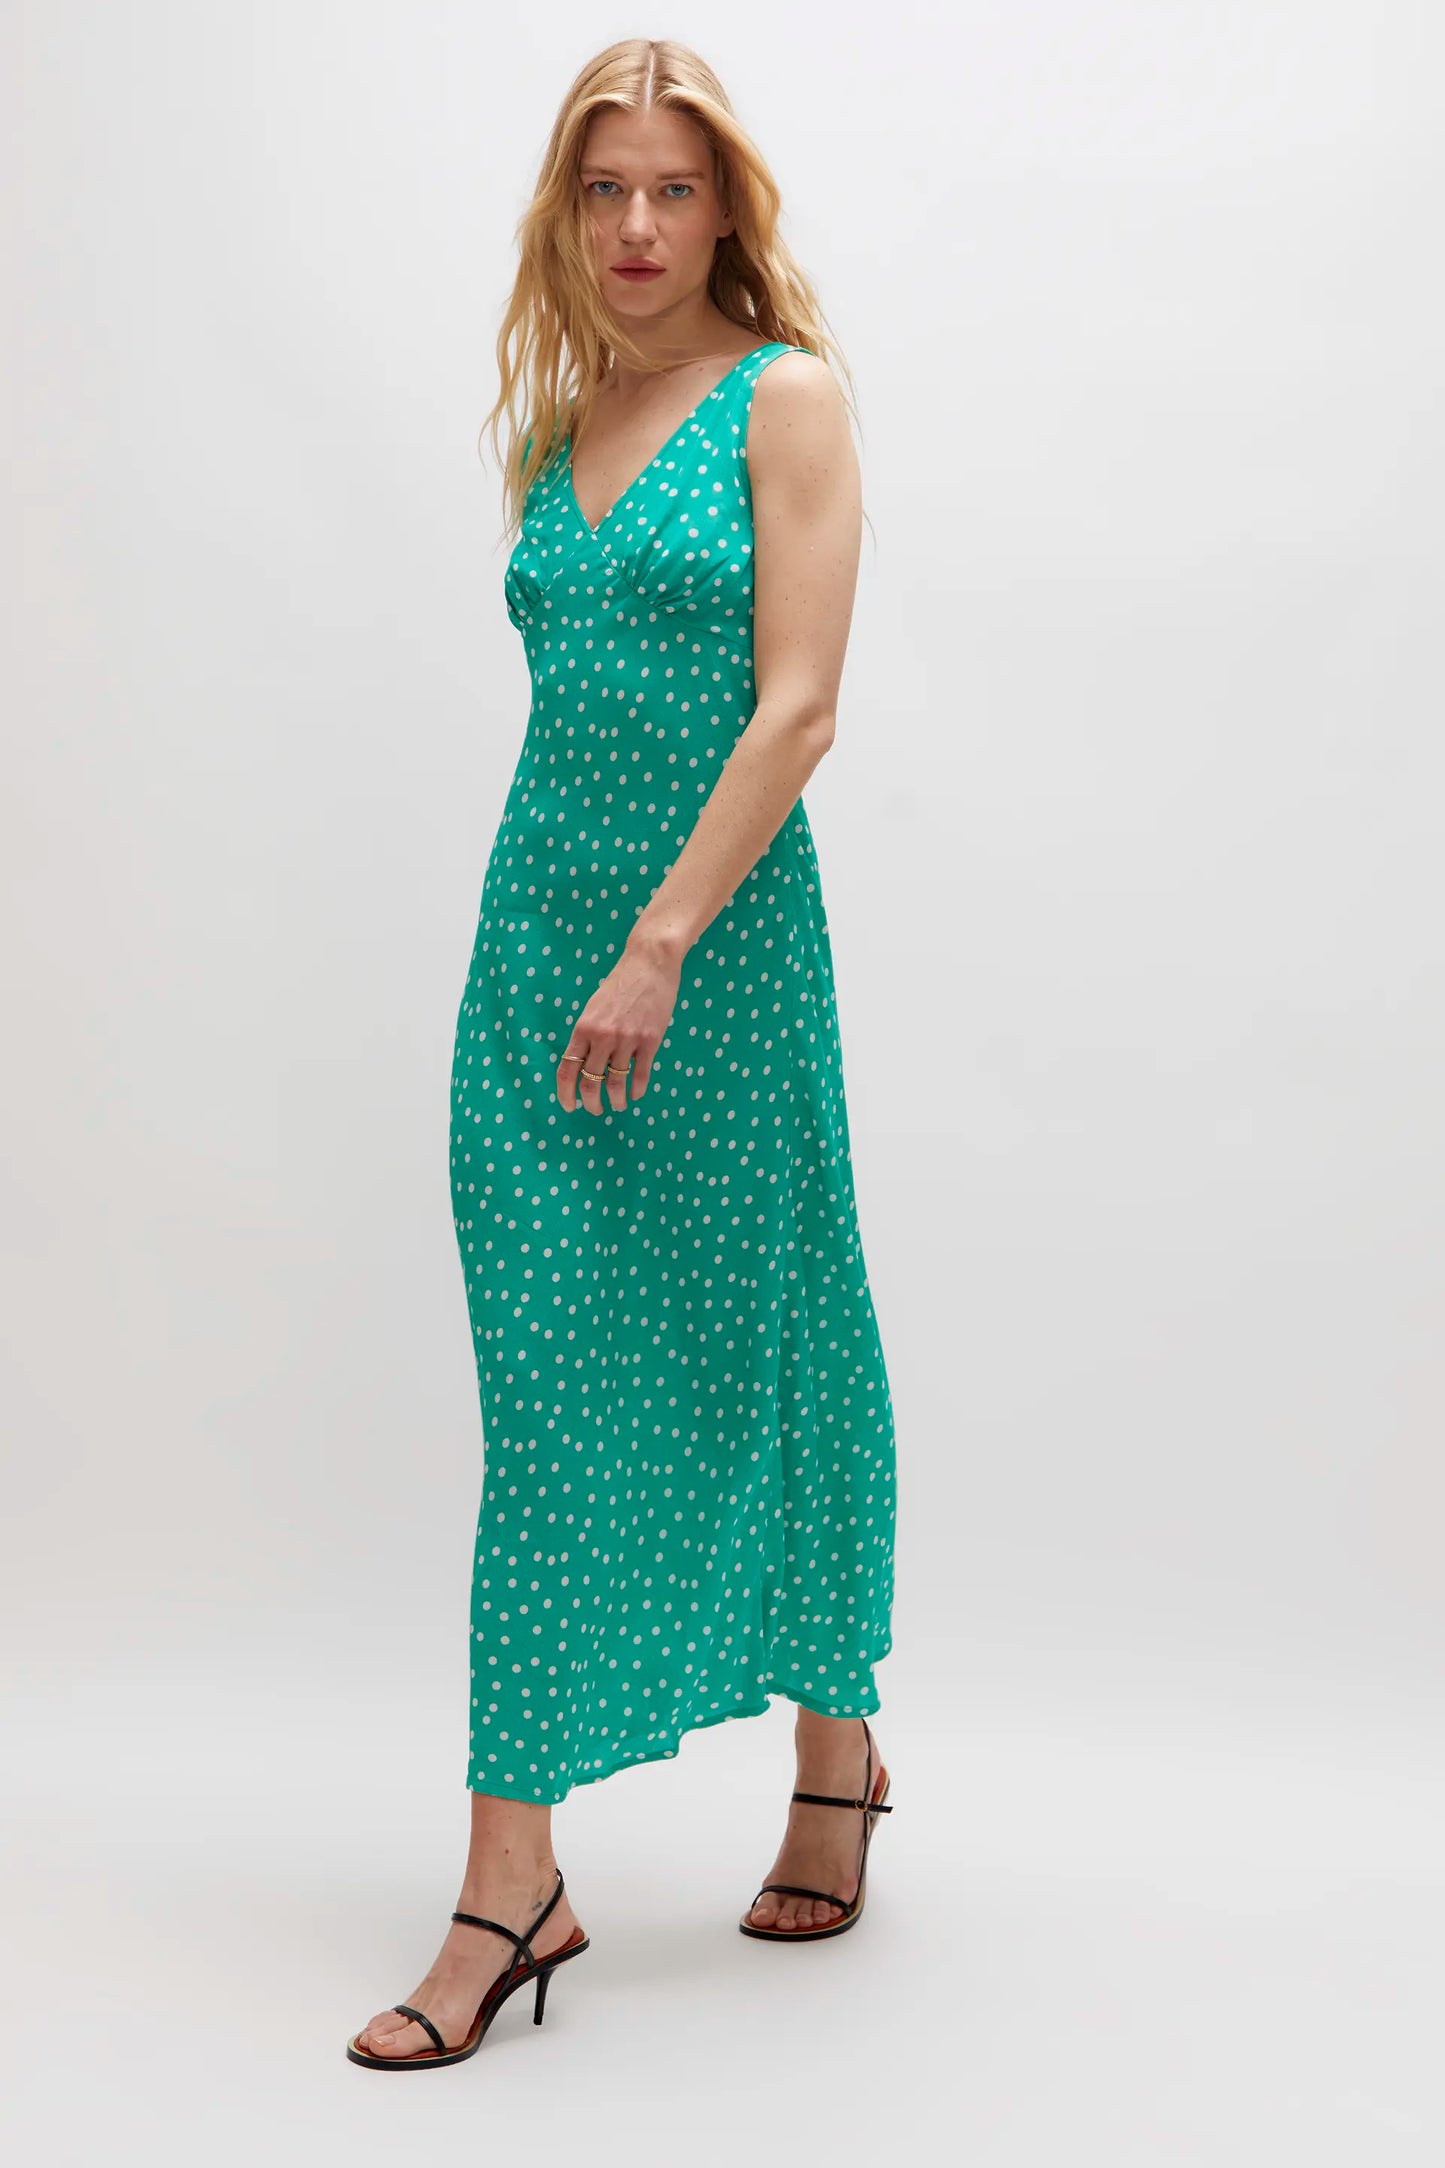 Long green polka dot dress